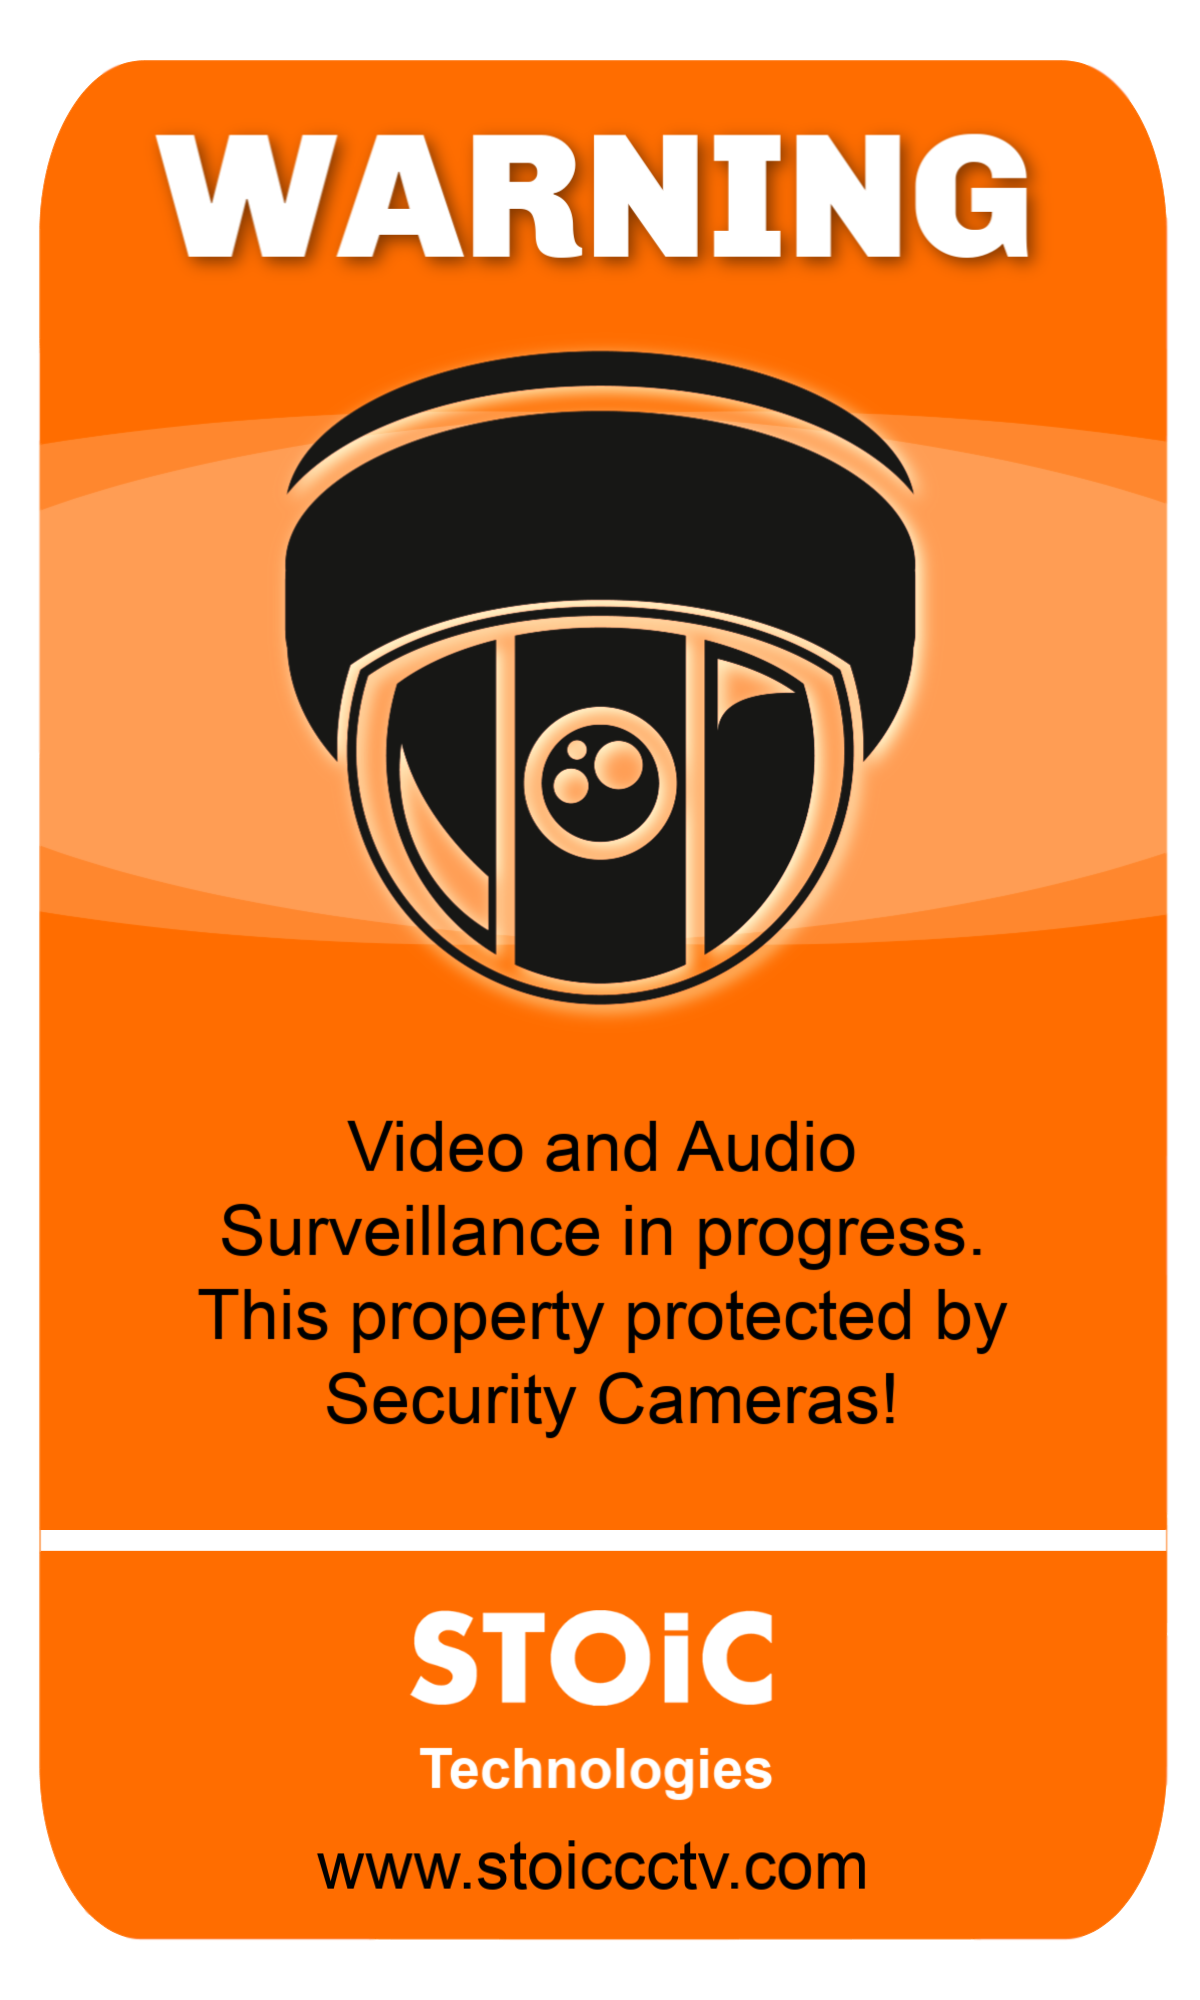 3pcs/set CCTV Security System Camera Sign Waterproof Warning StickersTDCA 